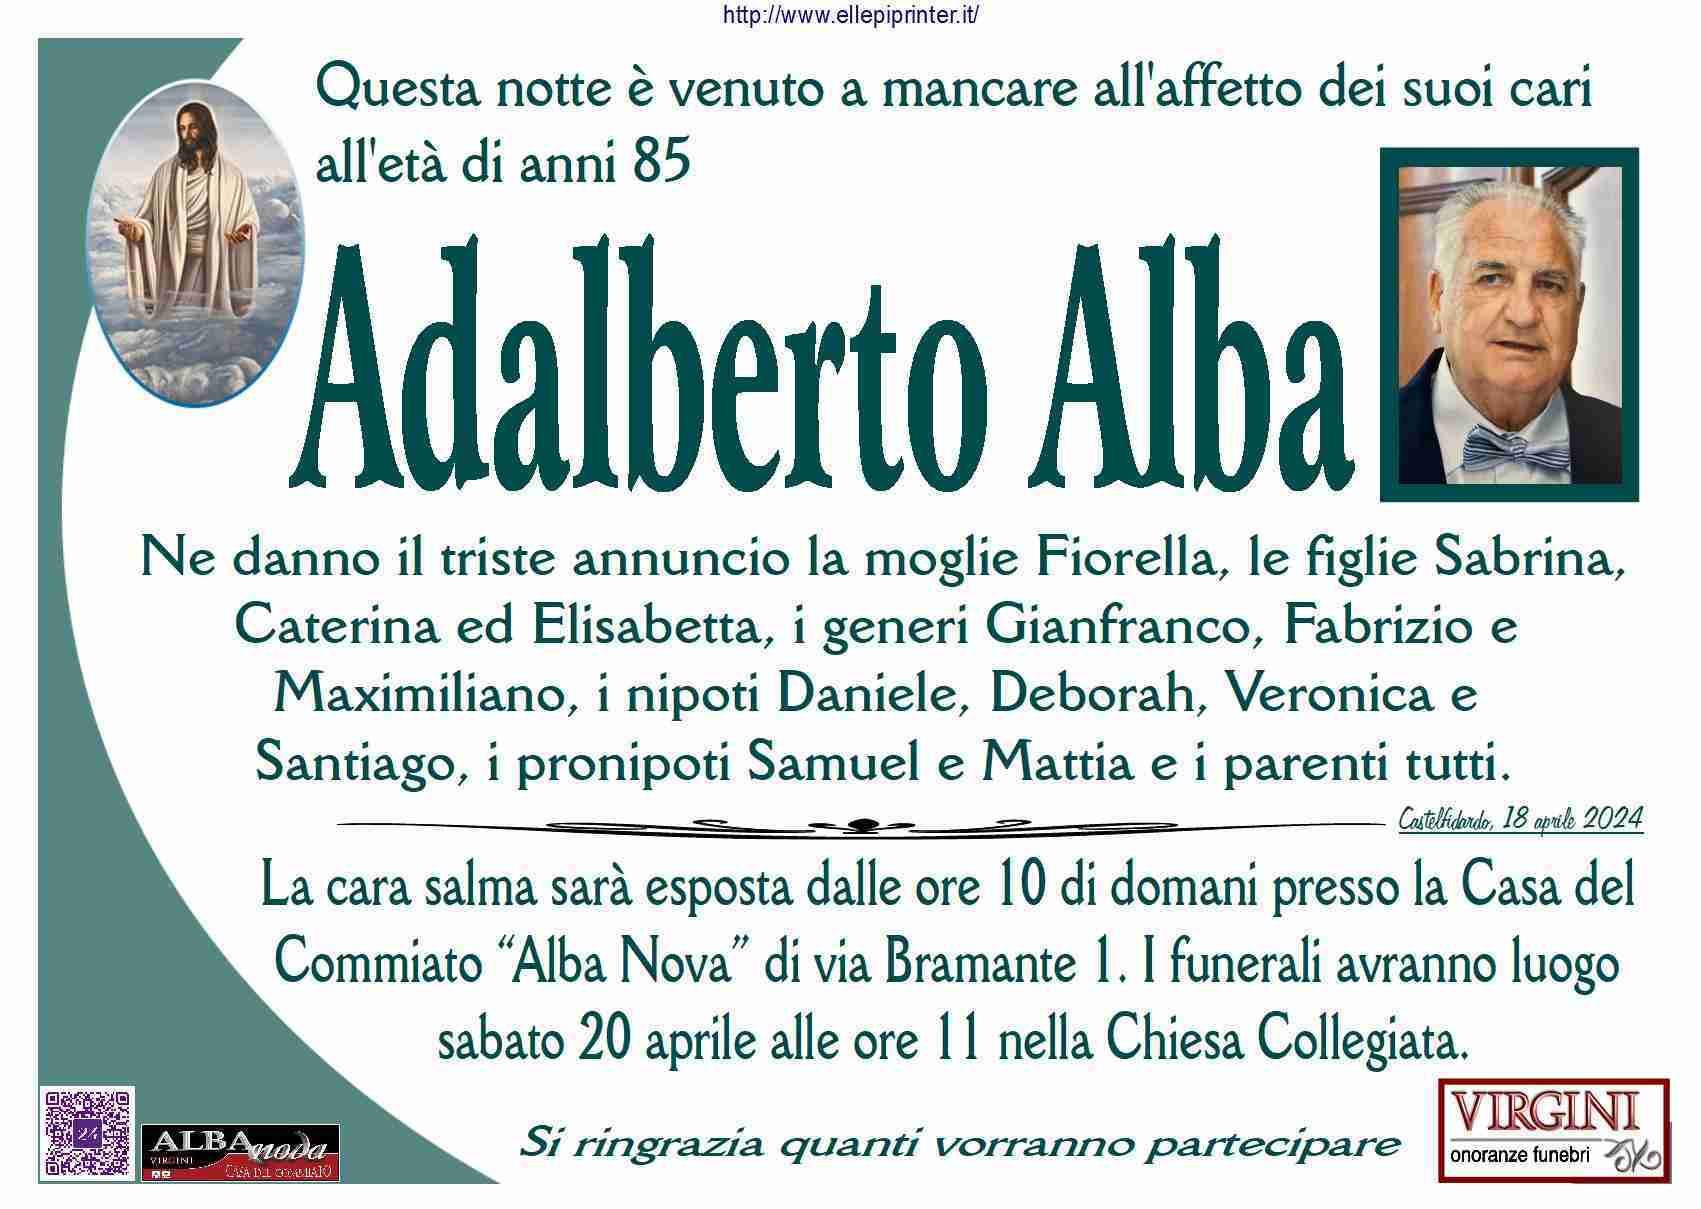 Adalberto Alba